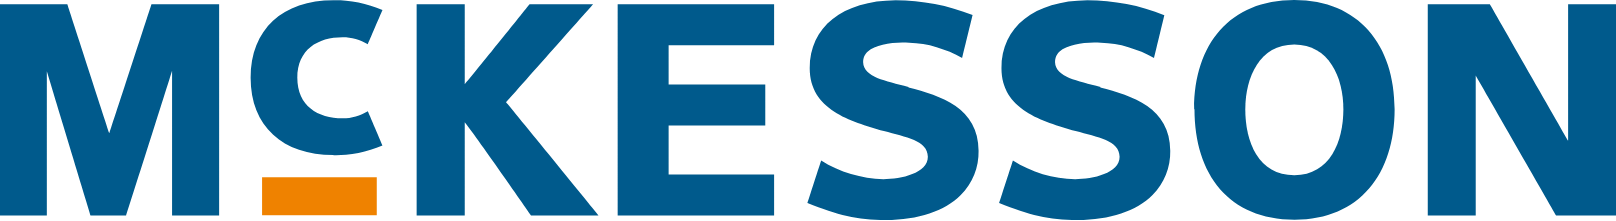 McKesson logo large (transparent PNG)